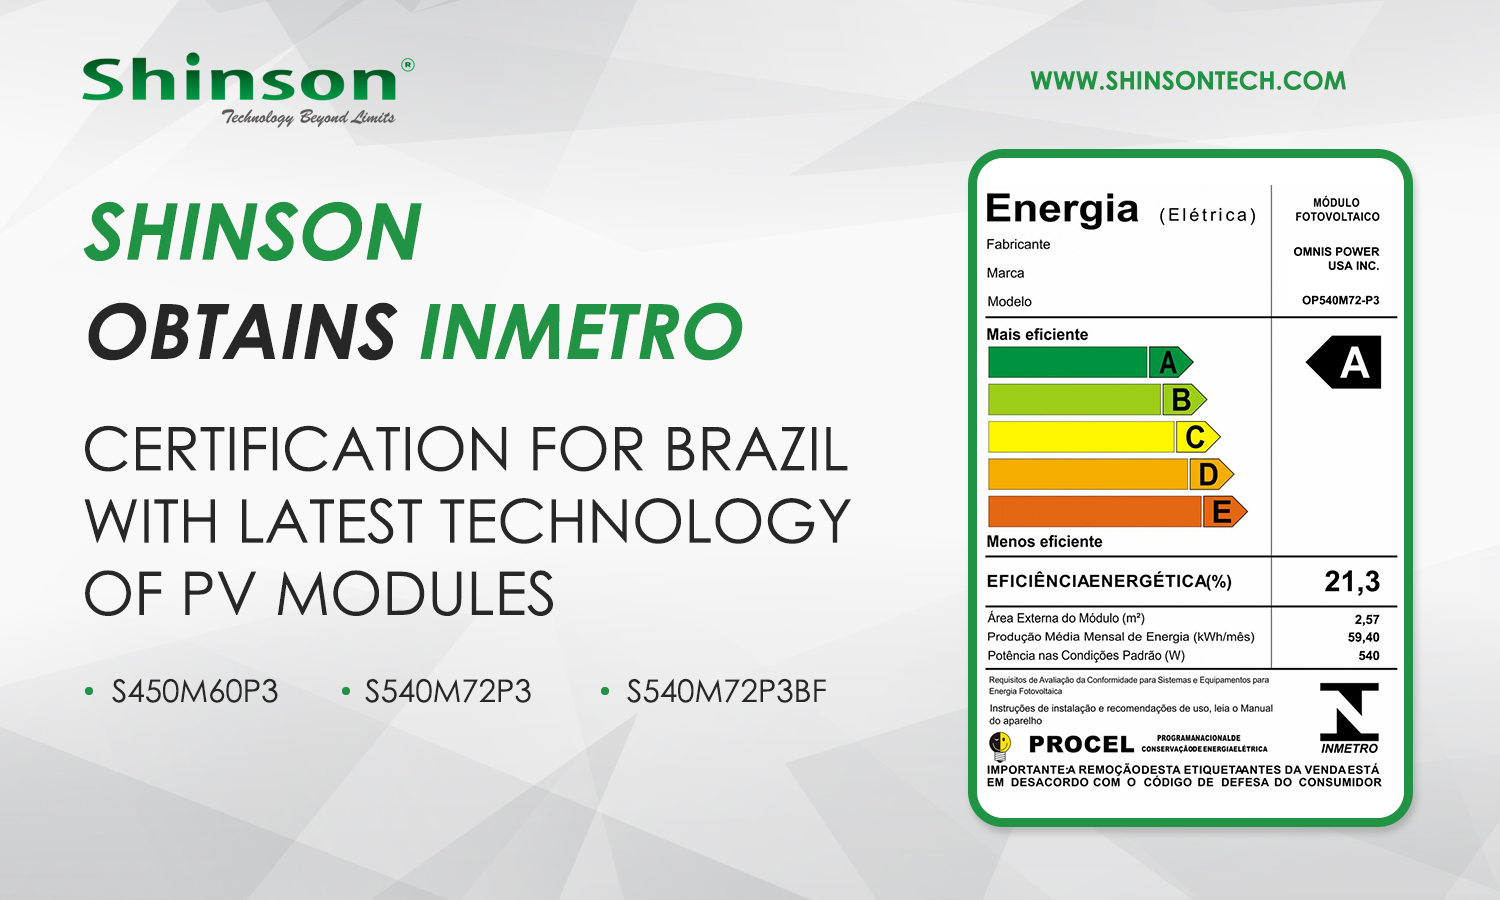 Shinson Cherries Inmetro Certification For Entering The Brazilian Market.